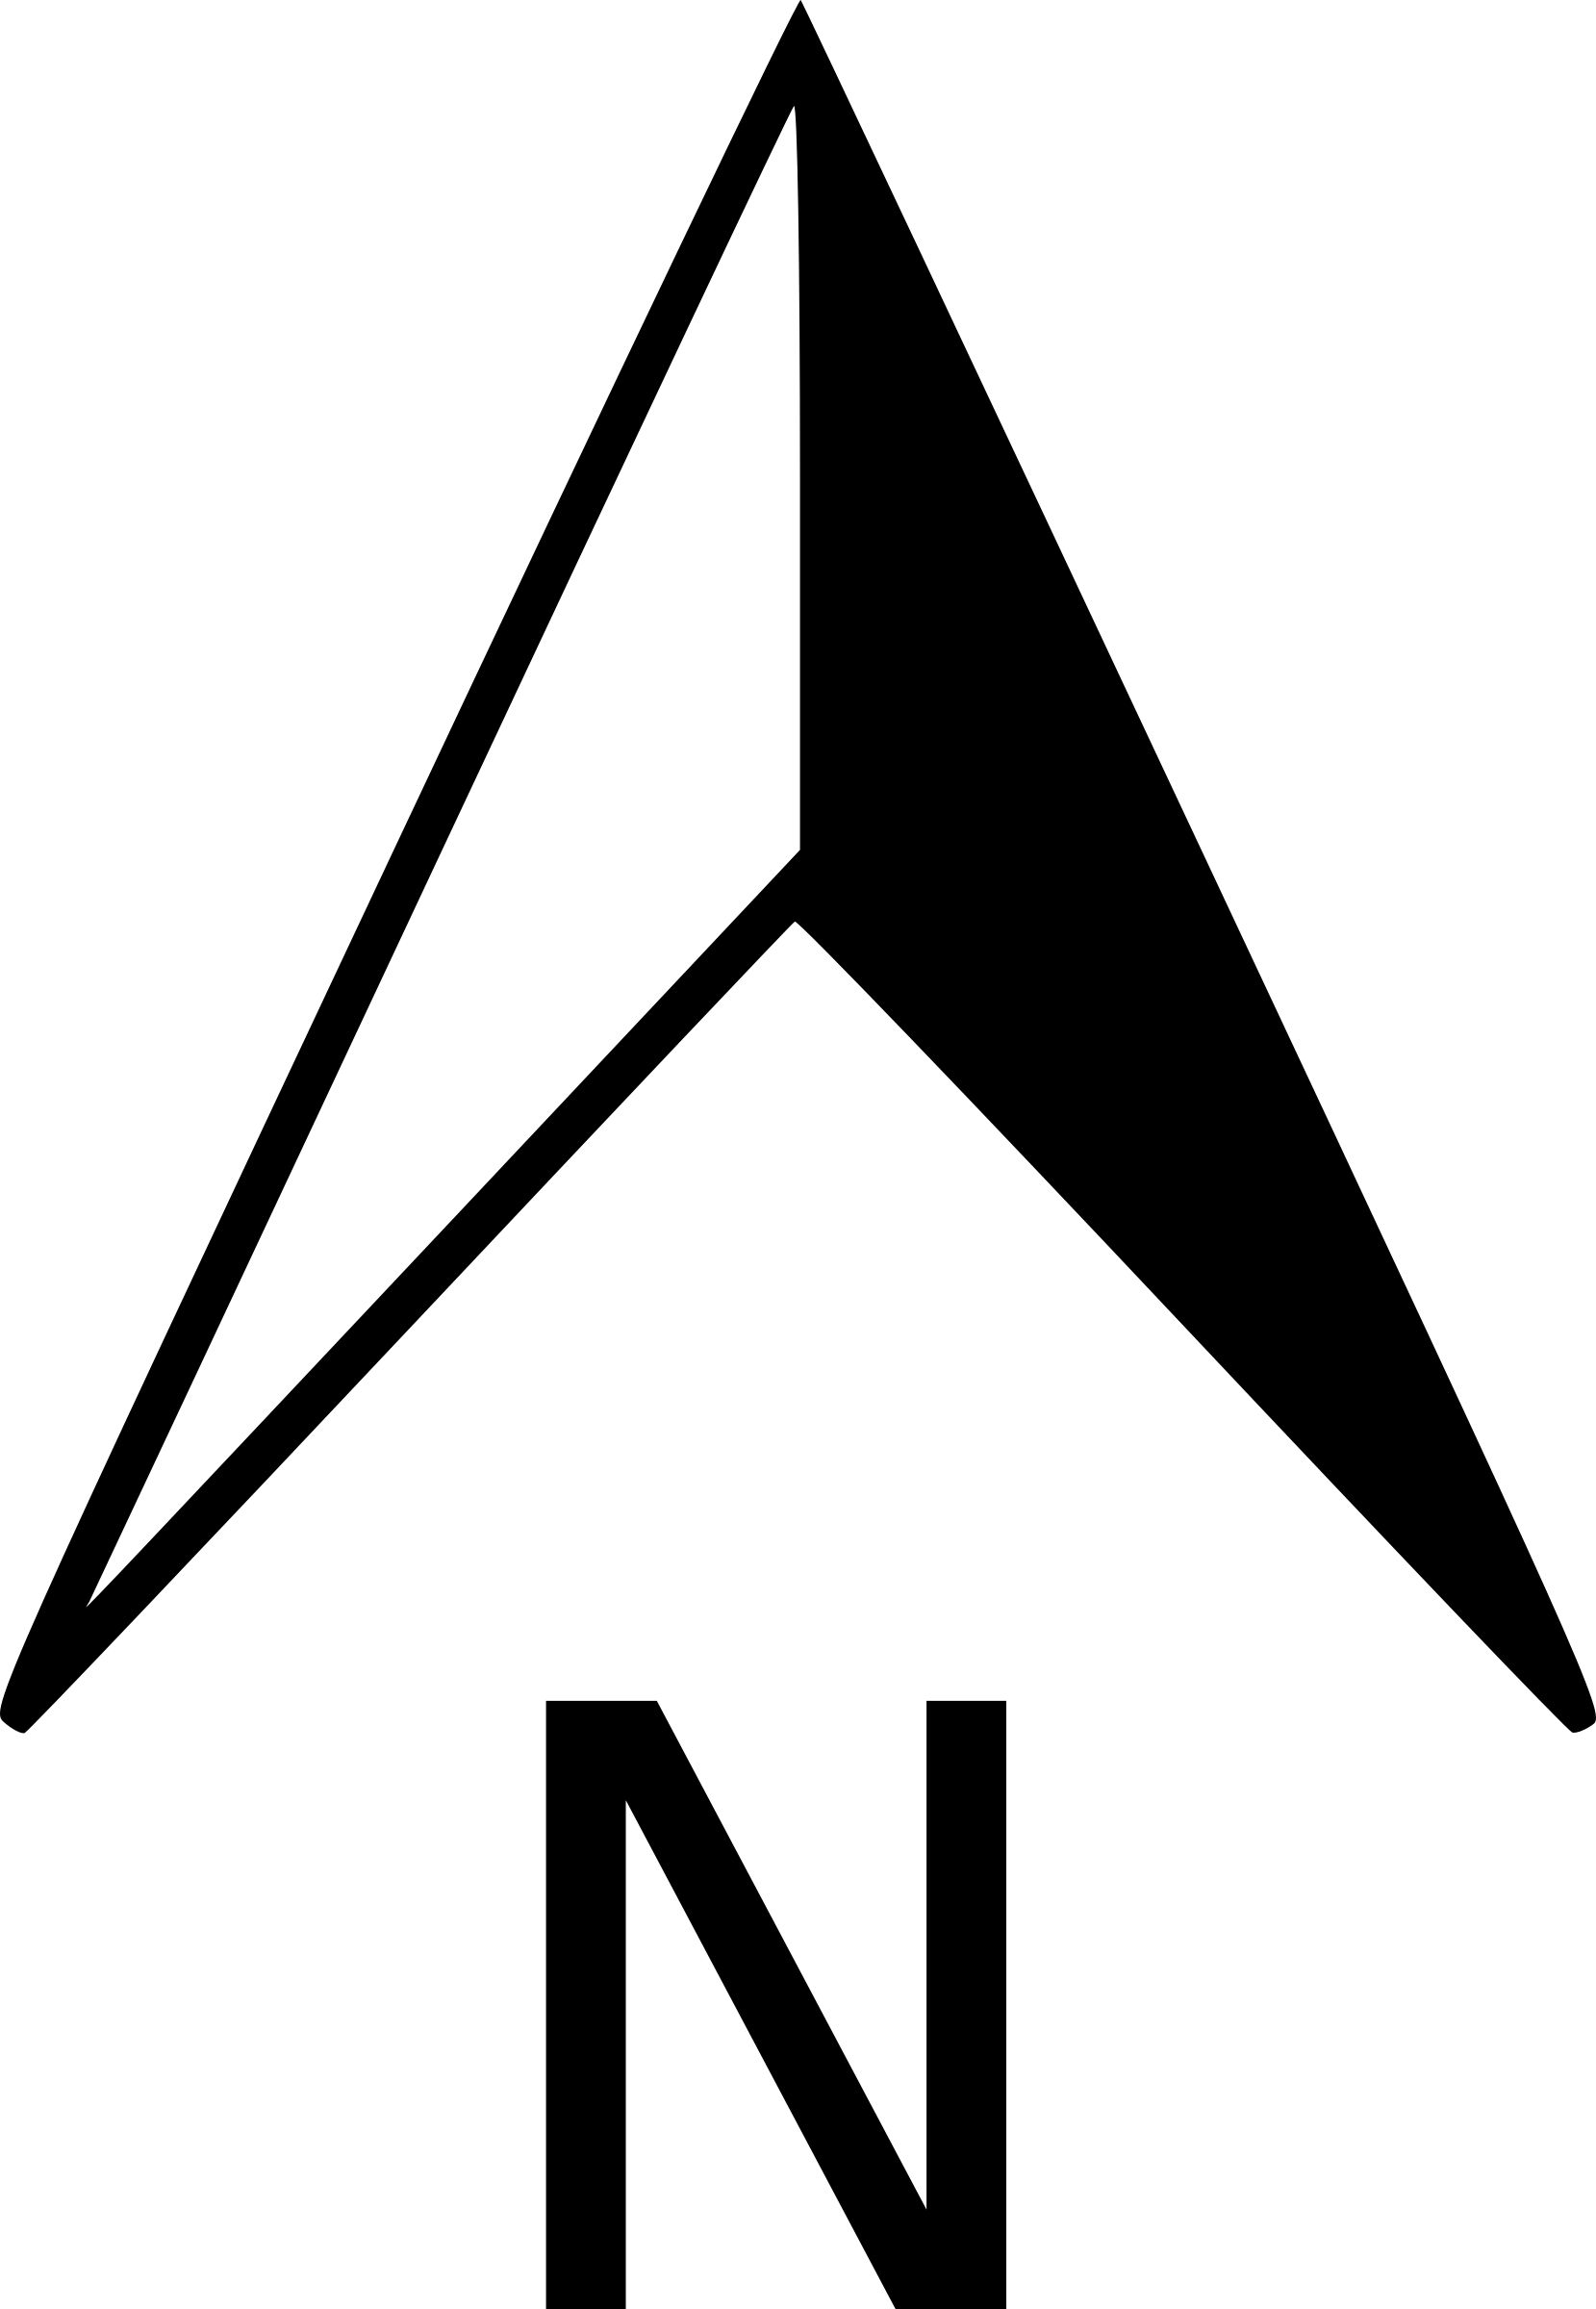 Compass North Logo - North arrow free stock svg